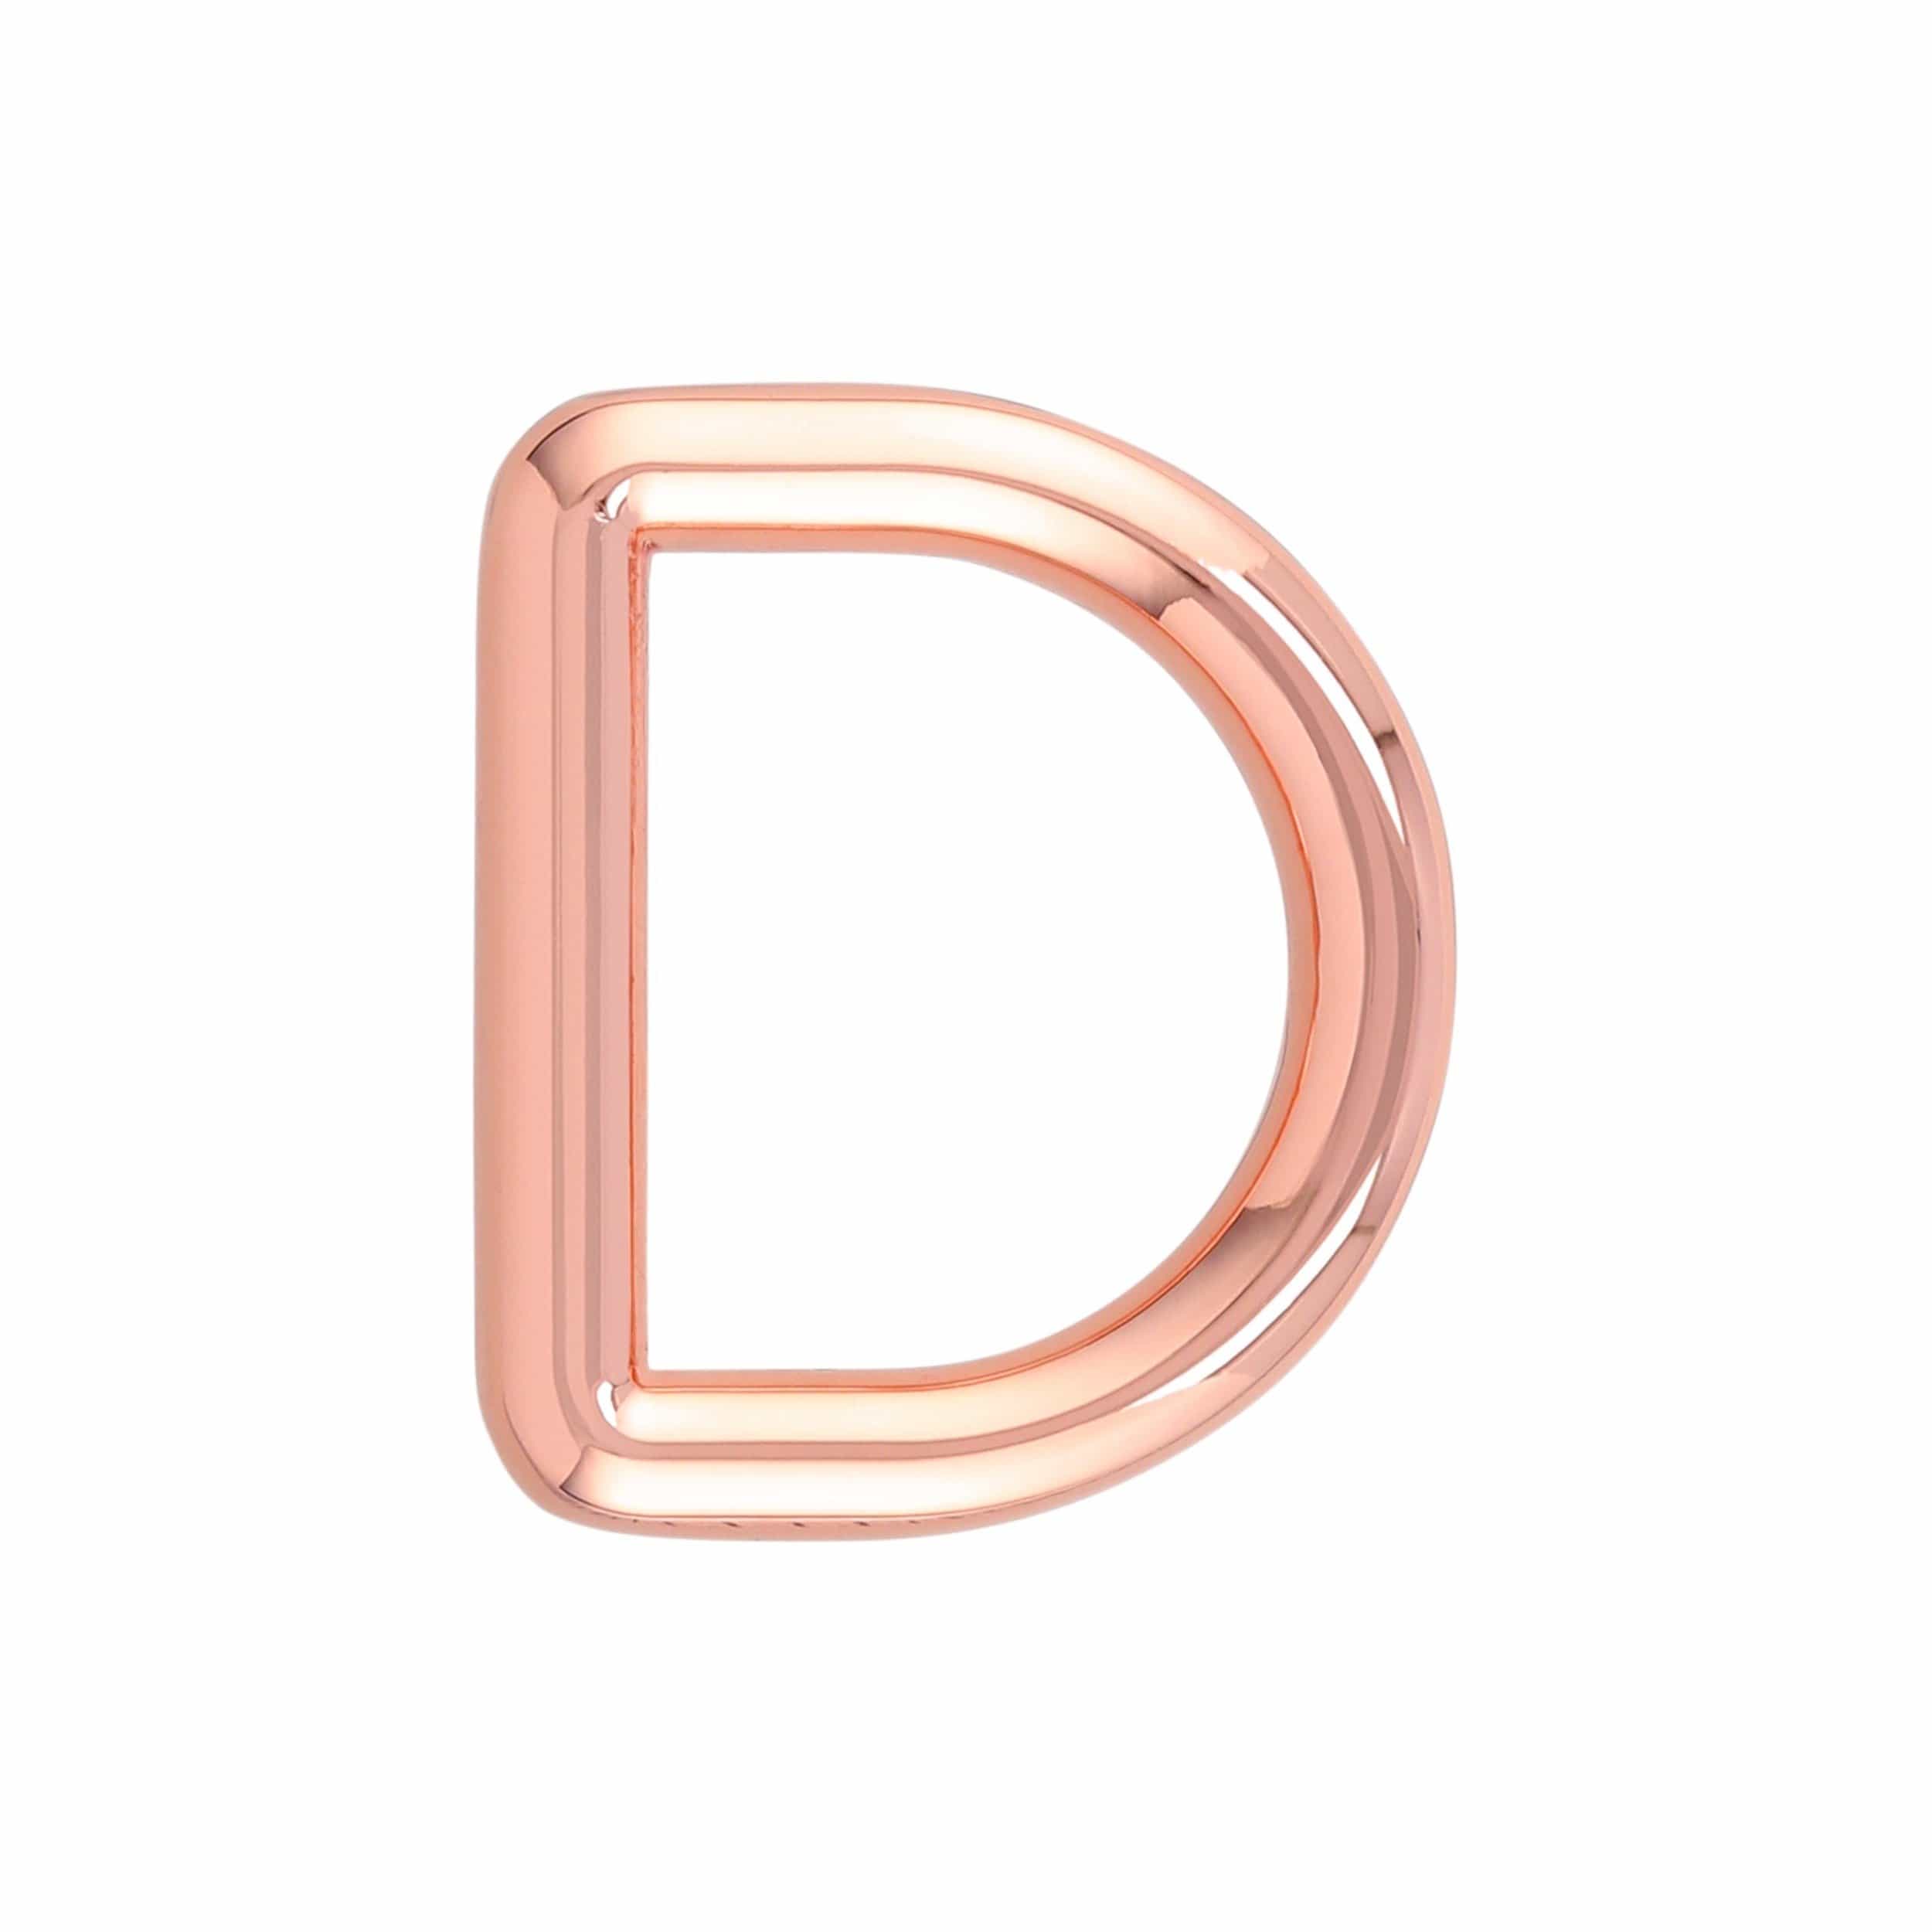 Wire wrapped handmade ring tutorial | Copper unique ring diy PDF – Artarina